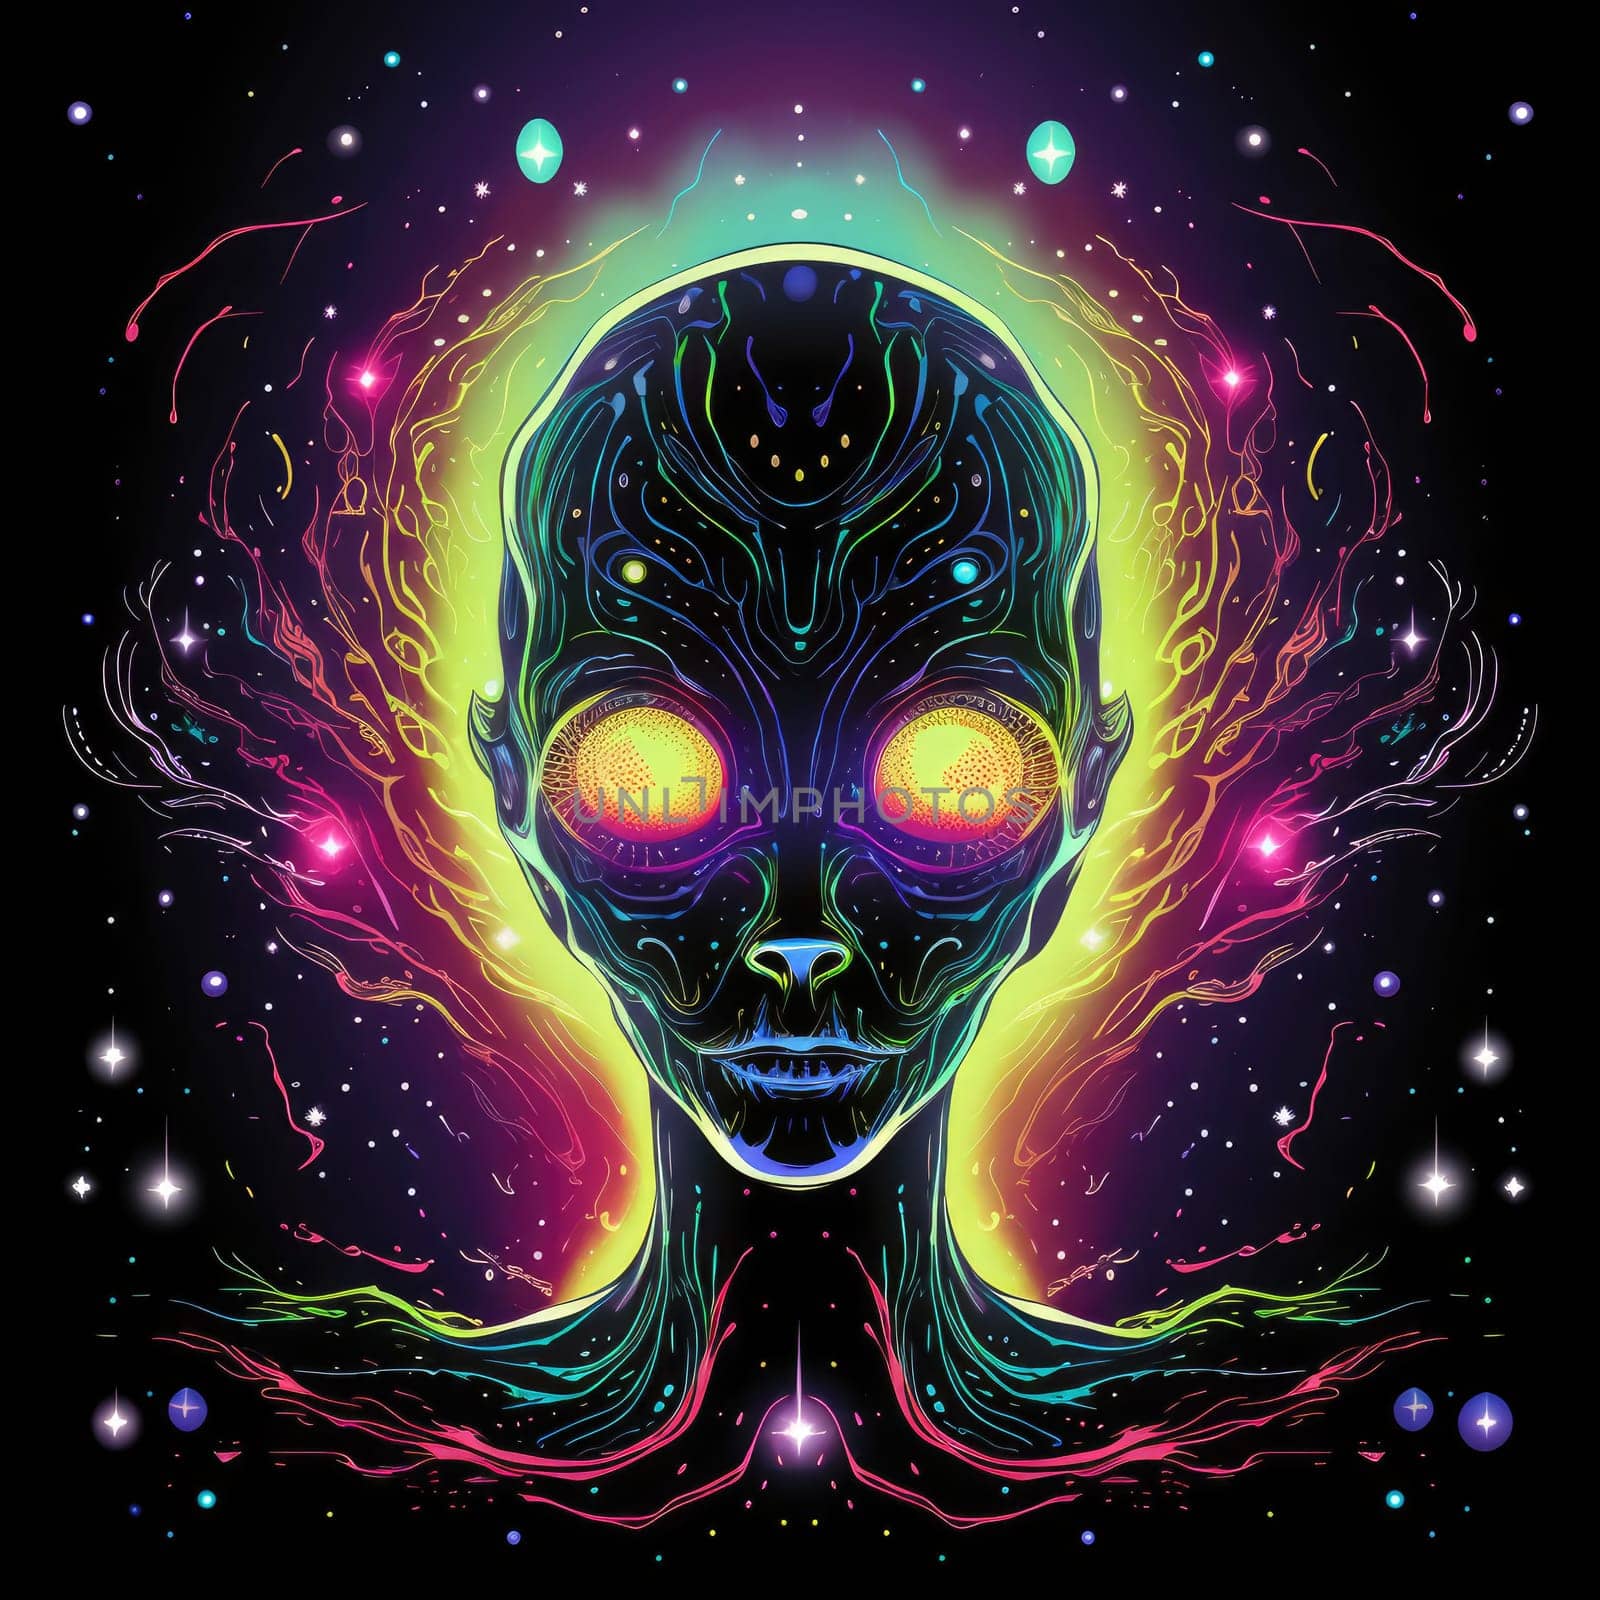 Abstract psychedelic alien in pop art style. by palinchak